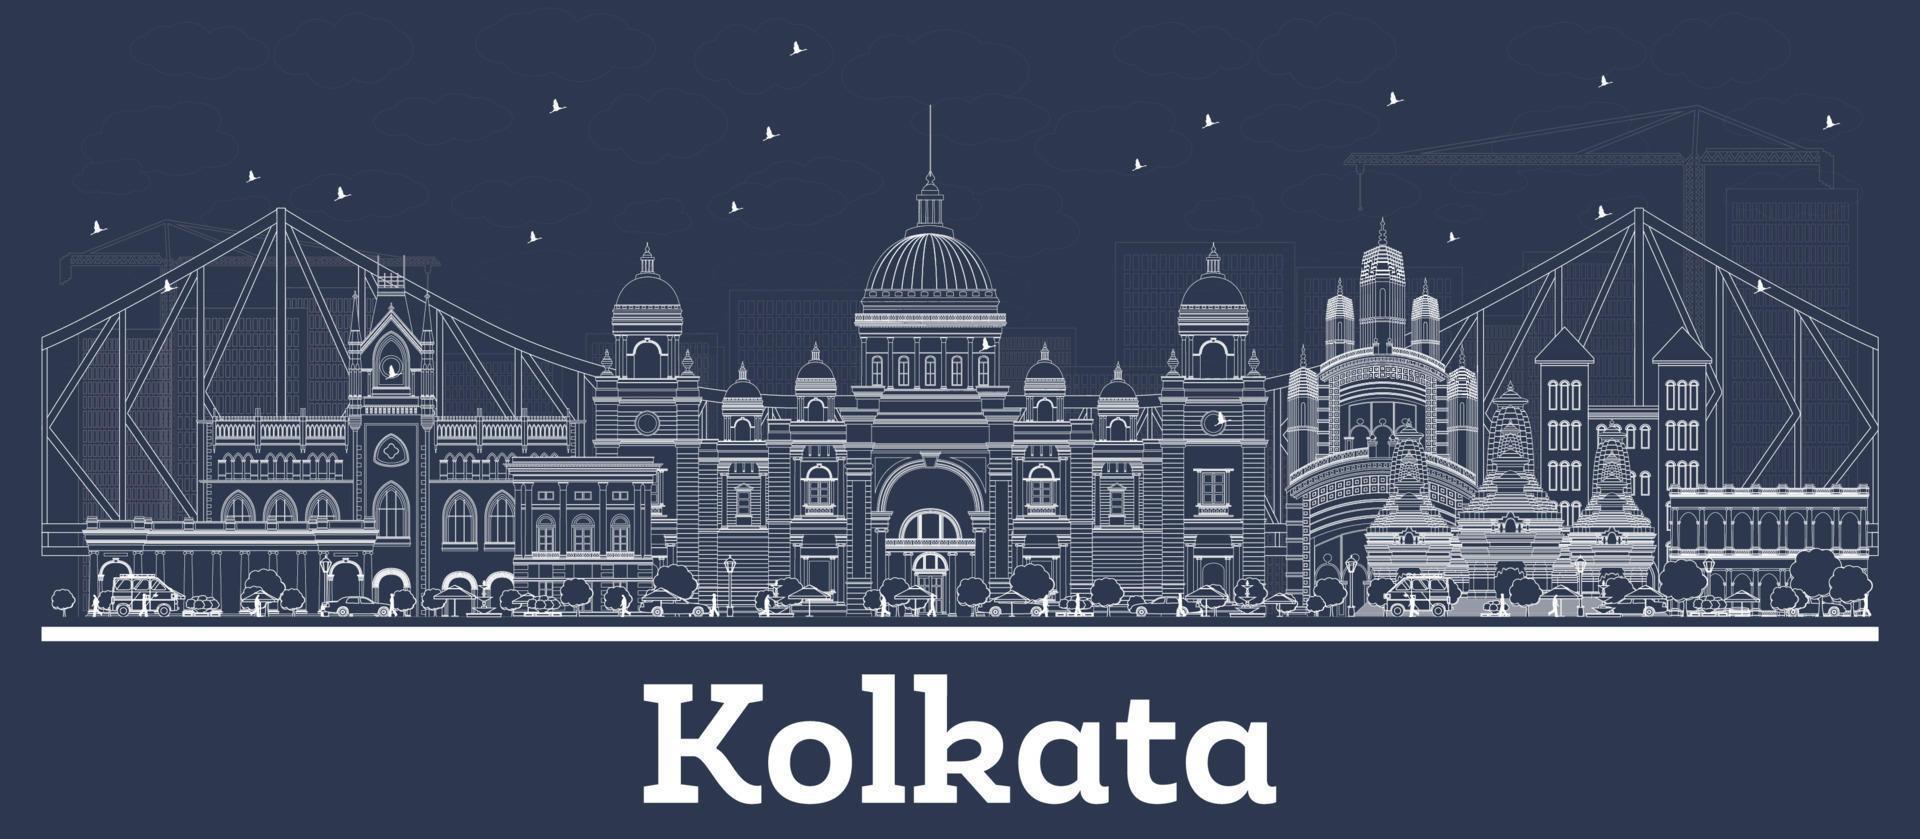 Outline Kolkata India City Skyline with White Buildings. vector